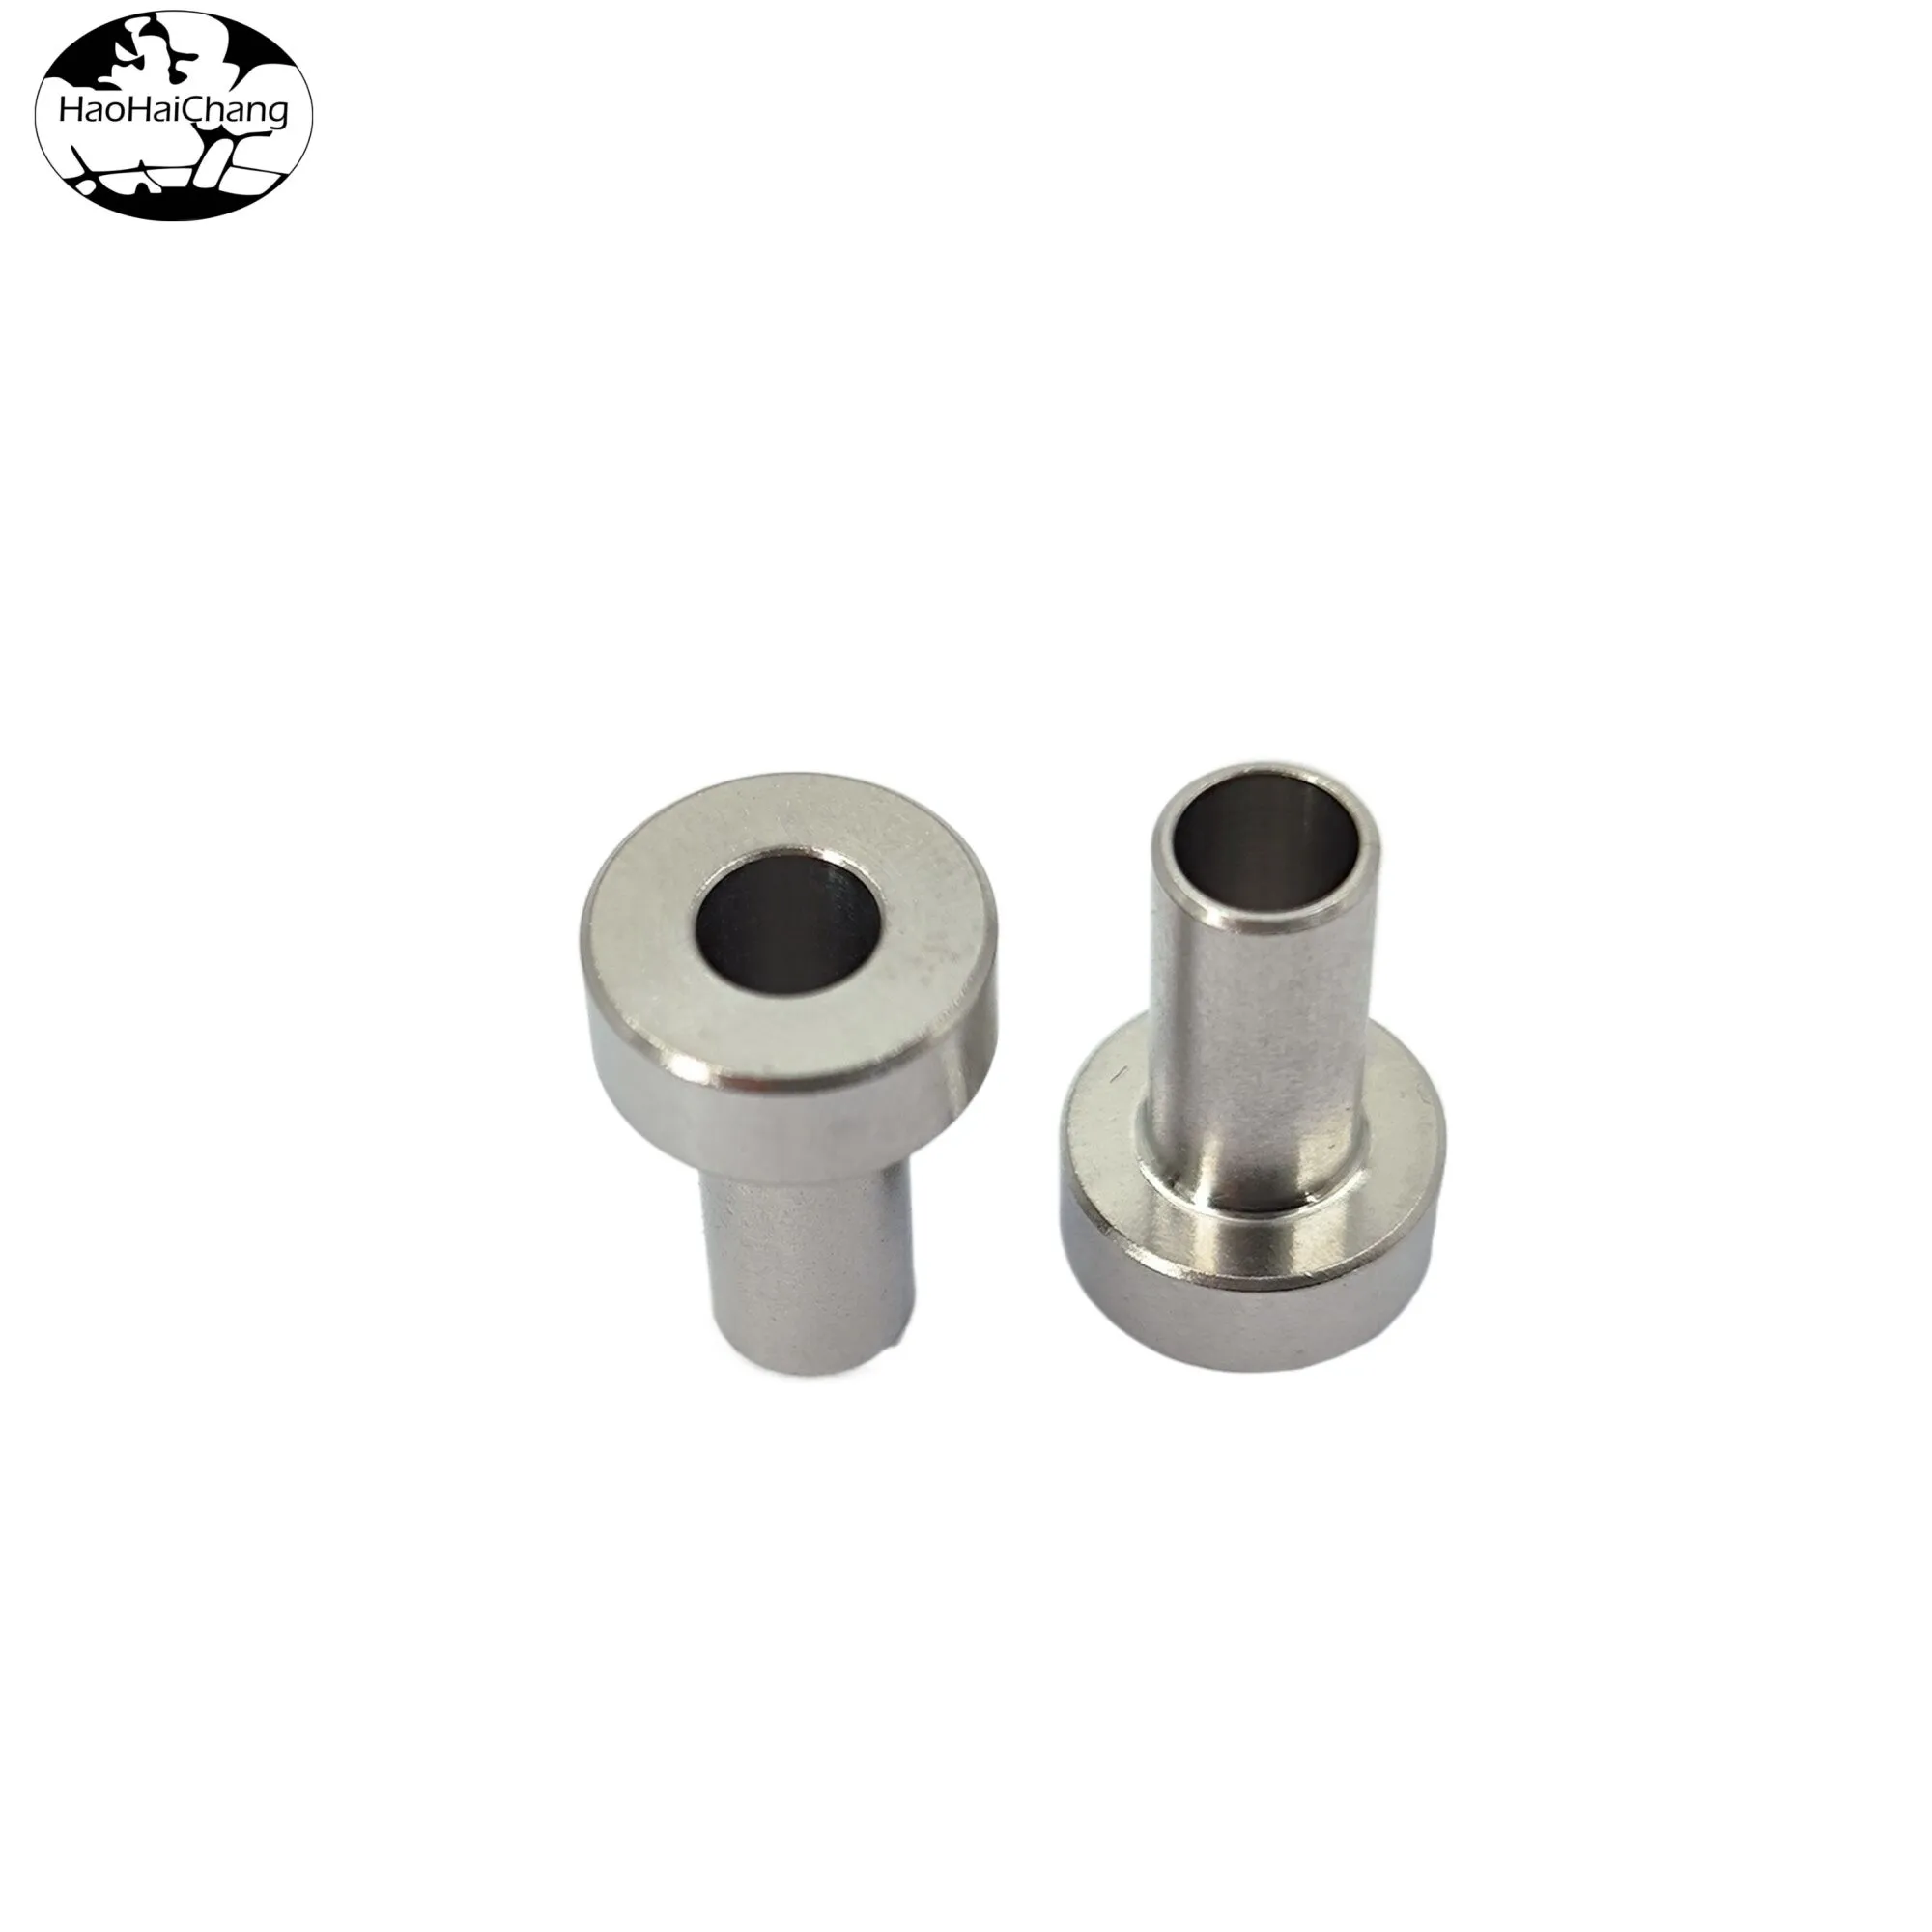 HHC-546 Cylindrical Step Positioning Pin Sleeve Bushing